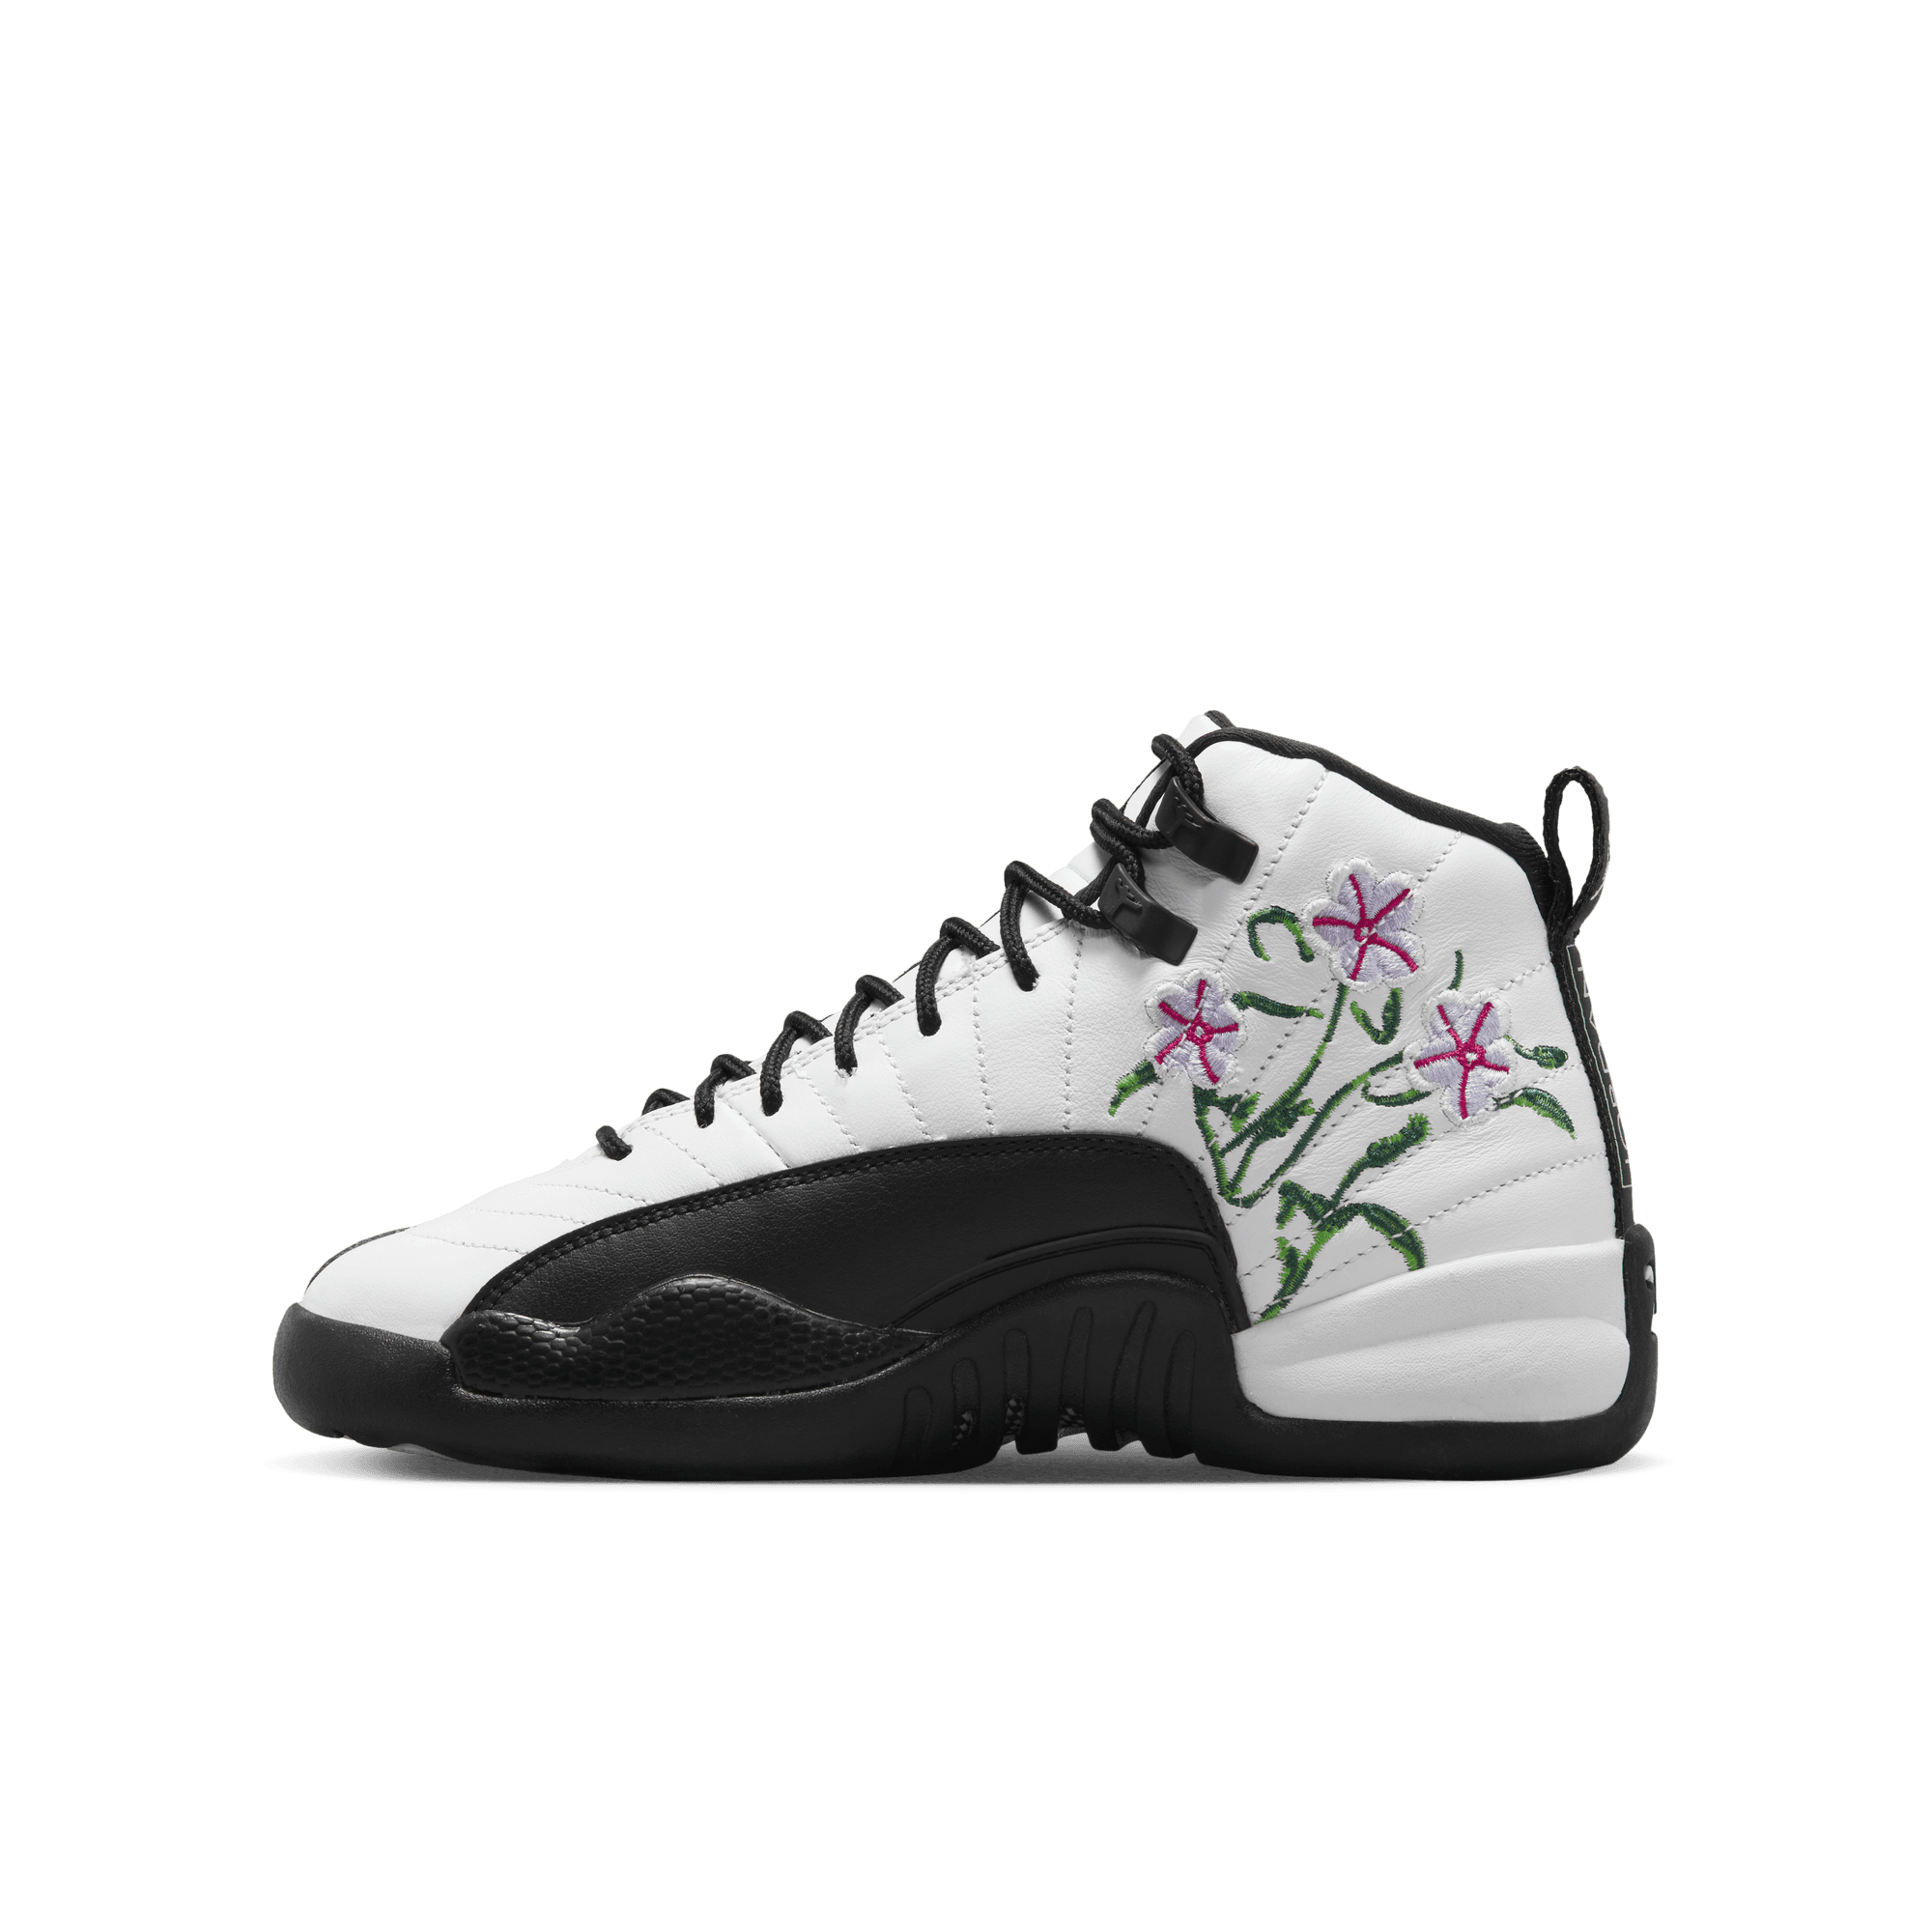 Air Jordan Women's 12 Retro Shoes